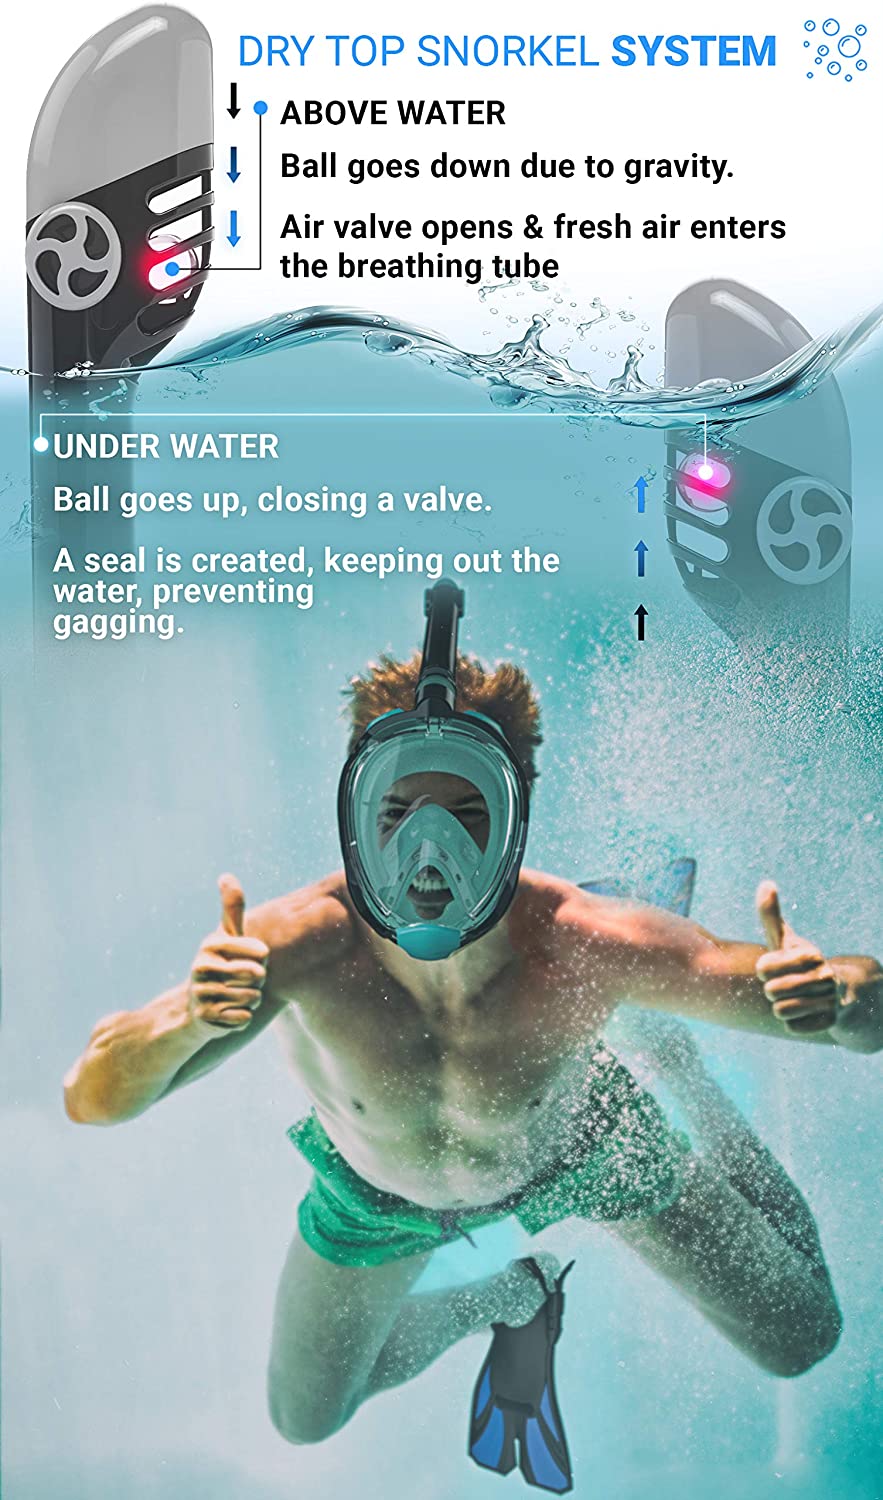 Snorkel Set Adult (Aqua) - Full Face Mask and Adjustable Swim Fins, 180° Panoramic View, Anti Fog and Anti Leak